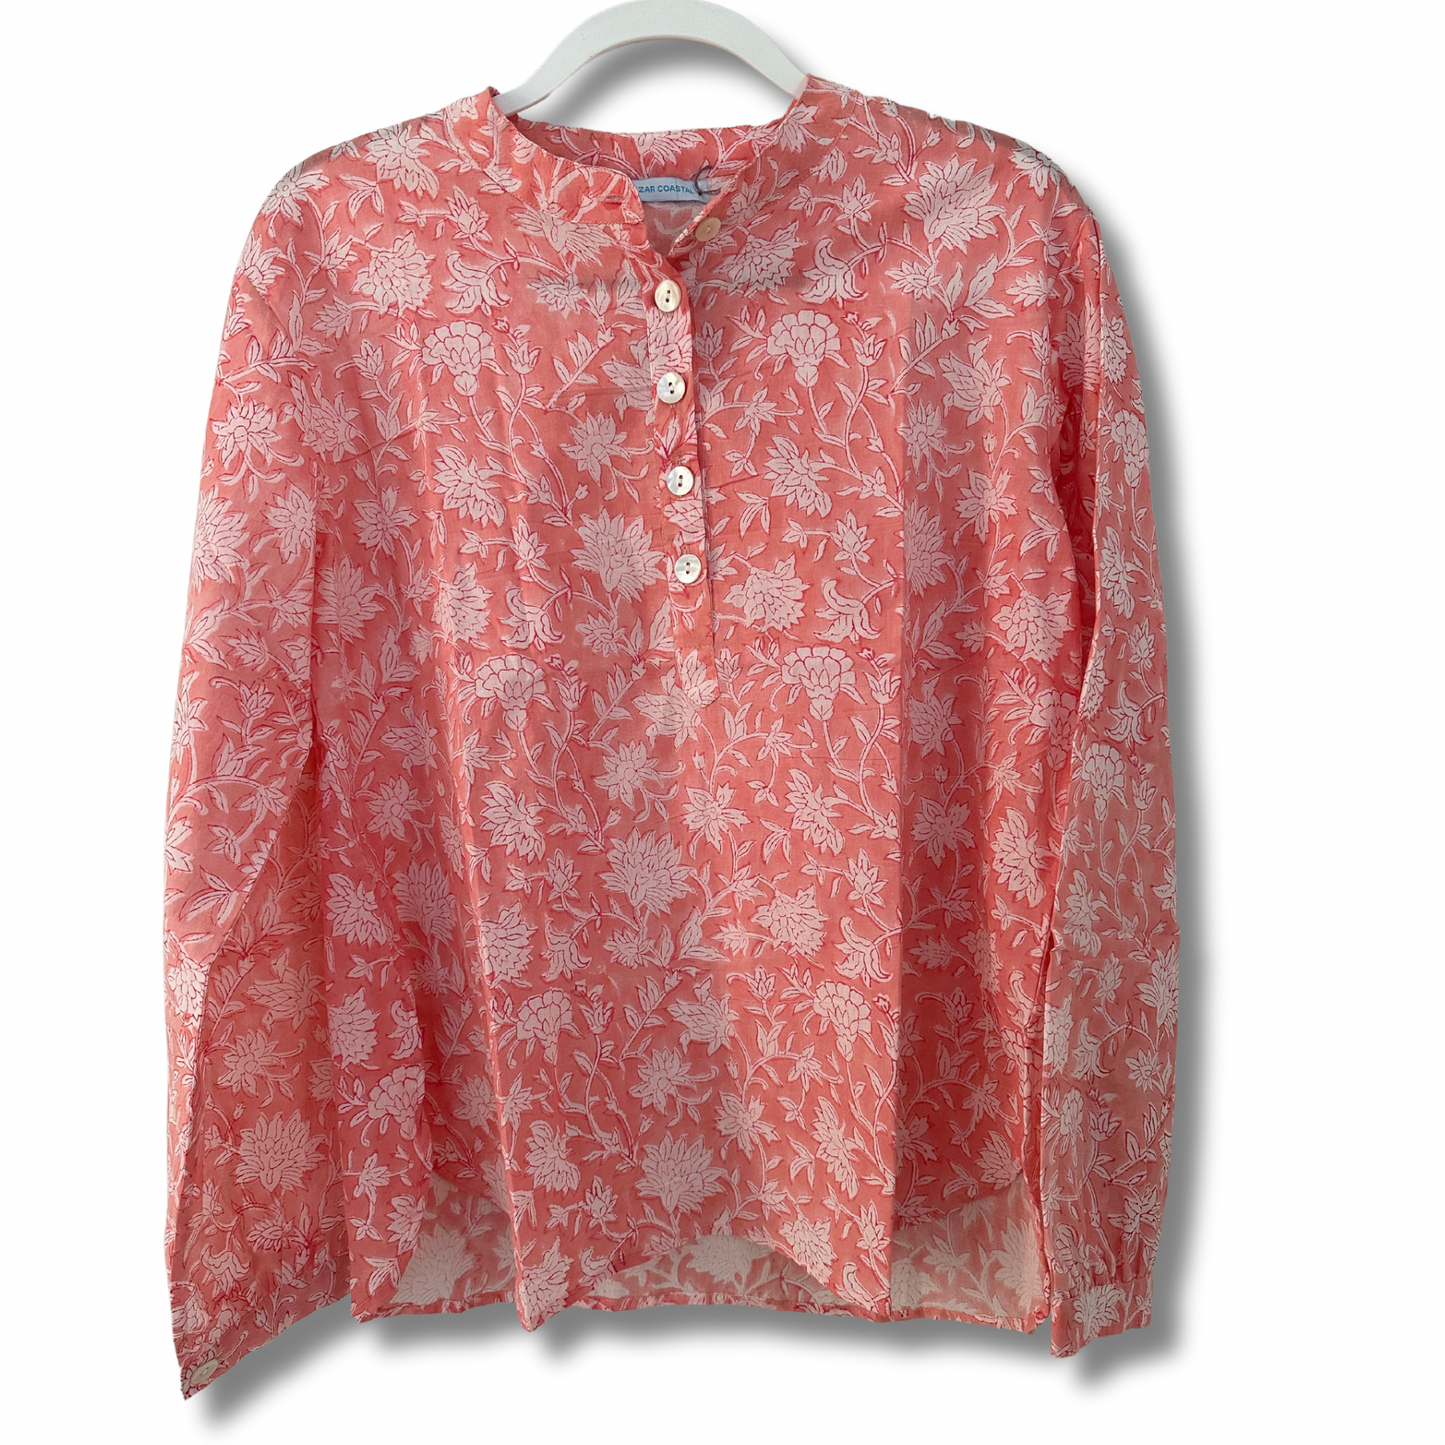 Facile Shirt, Just Peachy Pink - Final Sale